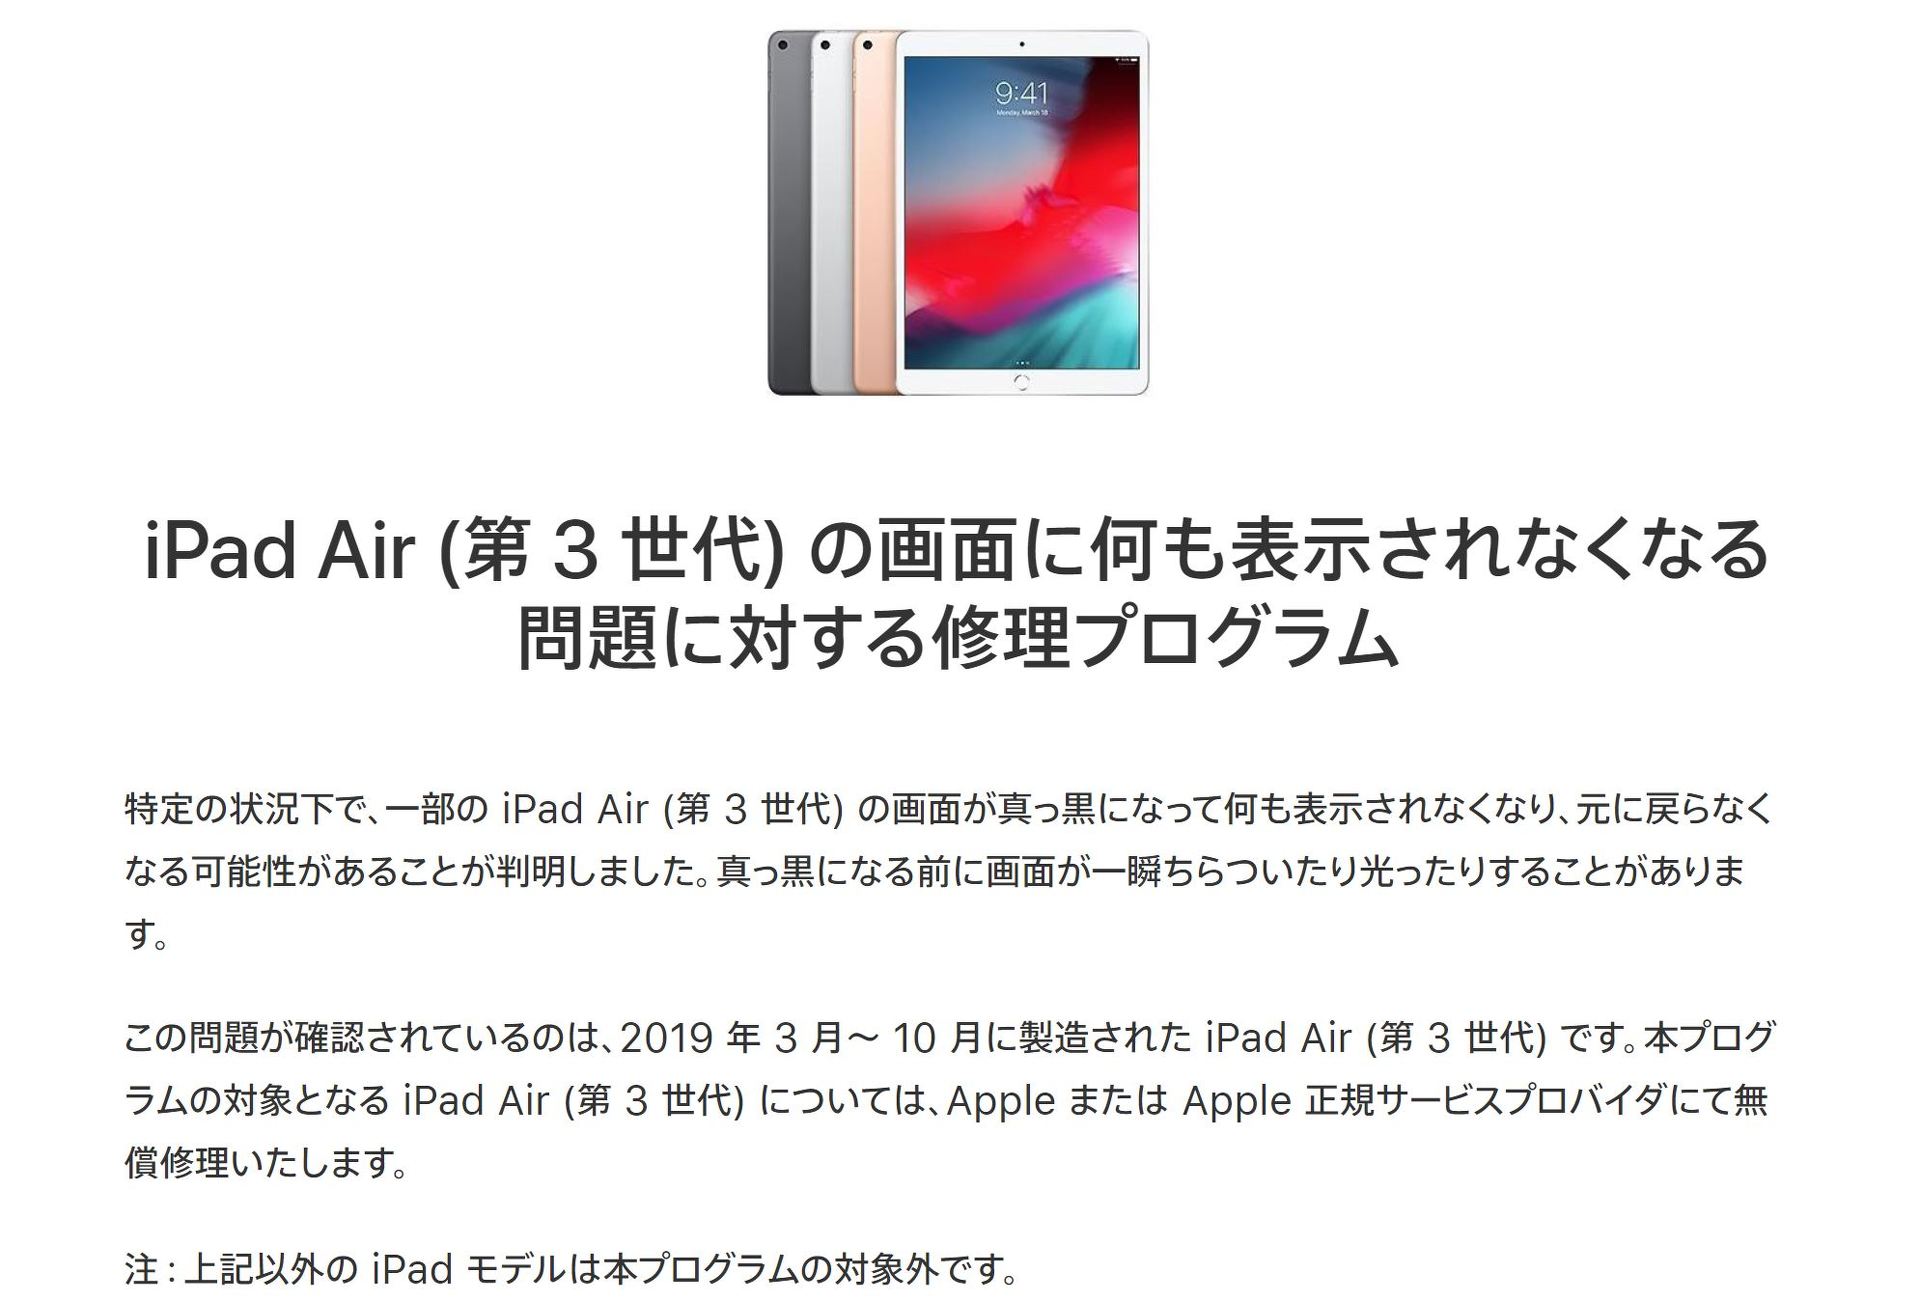 iPad Air 3 箱無し 購入前にコメくださいその他 - その他